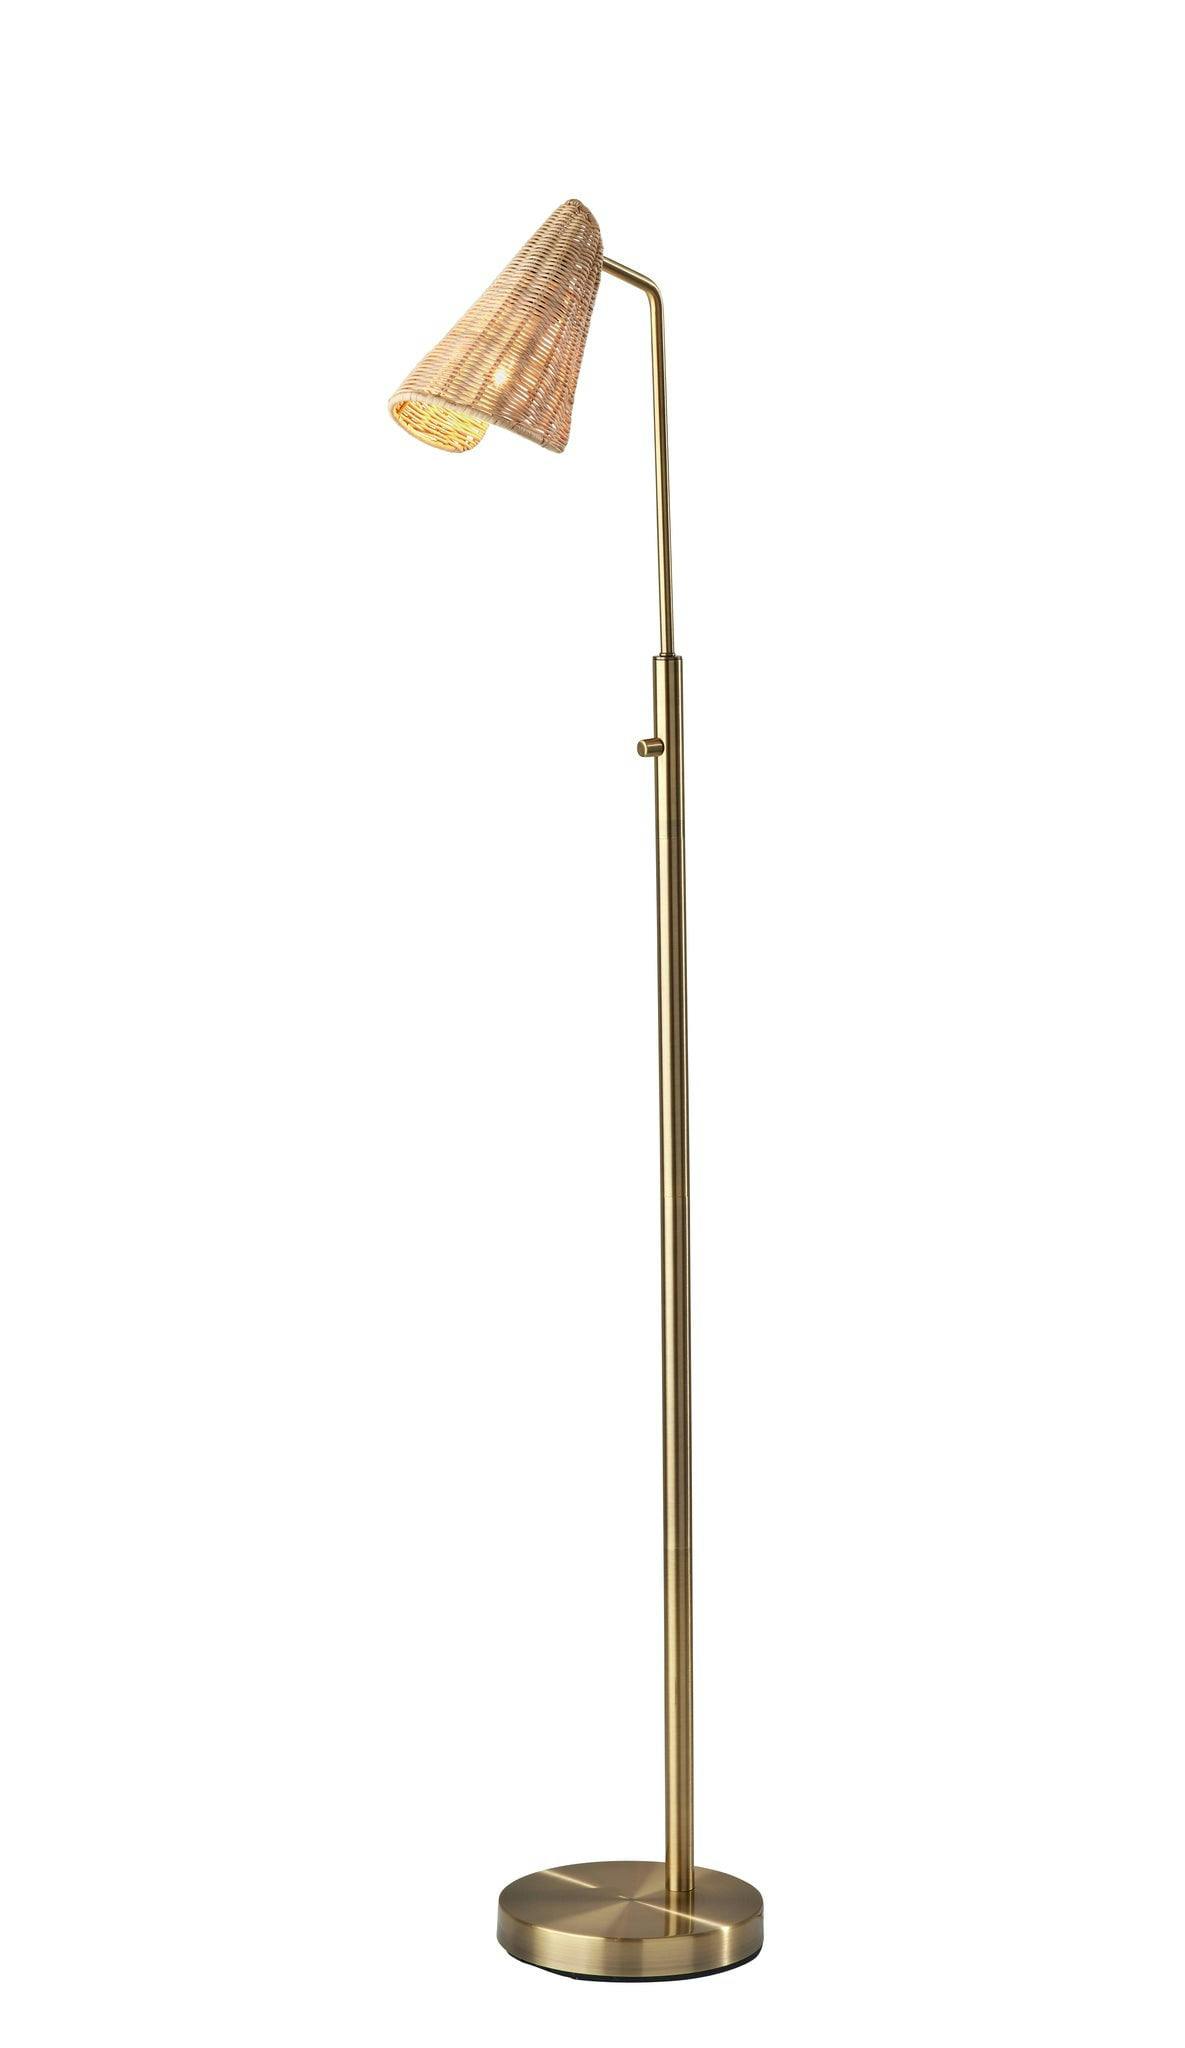 Elegant Antique Brass Adjustable Floor Lamp with Rattan Shade